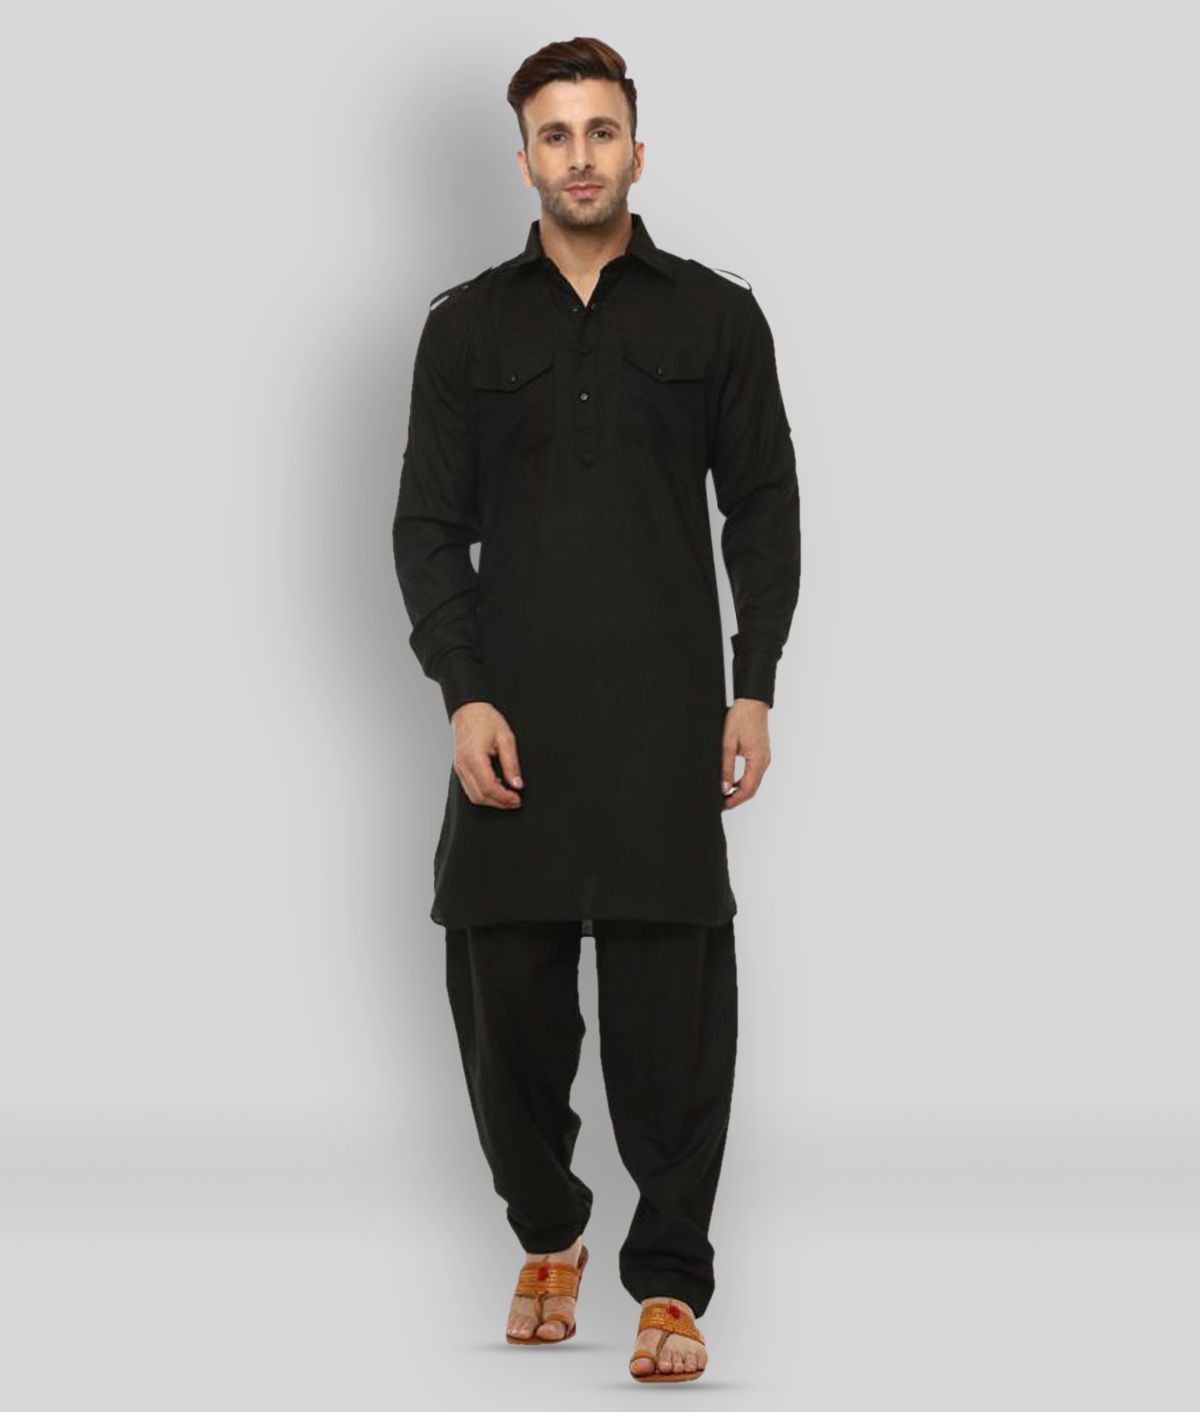     			Hangup - Black Cotton Regular Fit Men's Pathani Suit ( Pack of 1 )